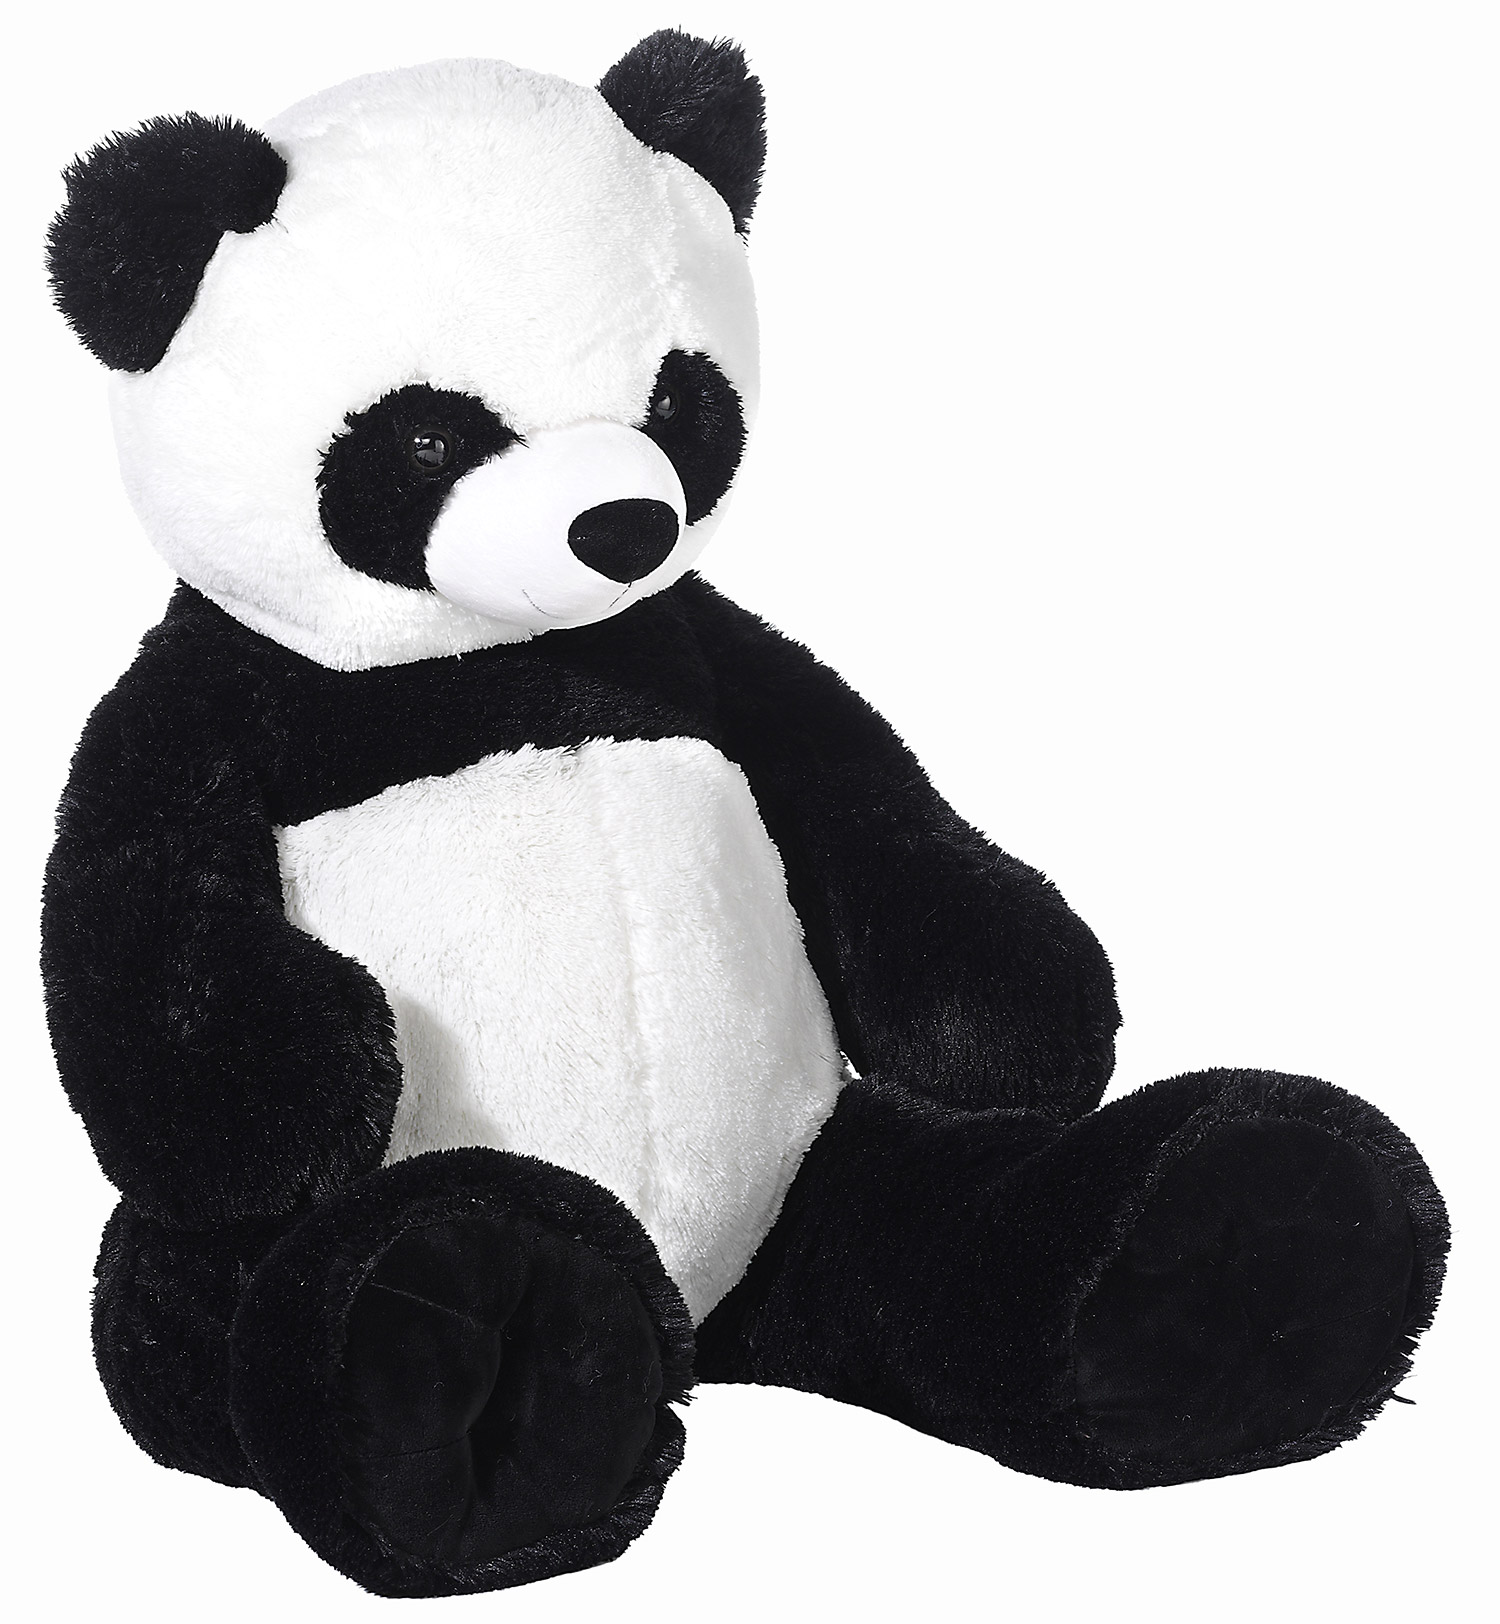 Misanimo Panda Bär schlenkernd 100cm 